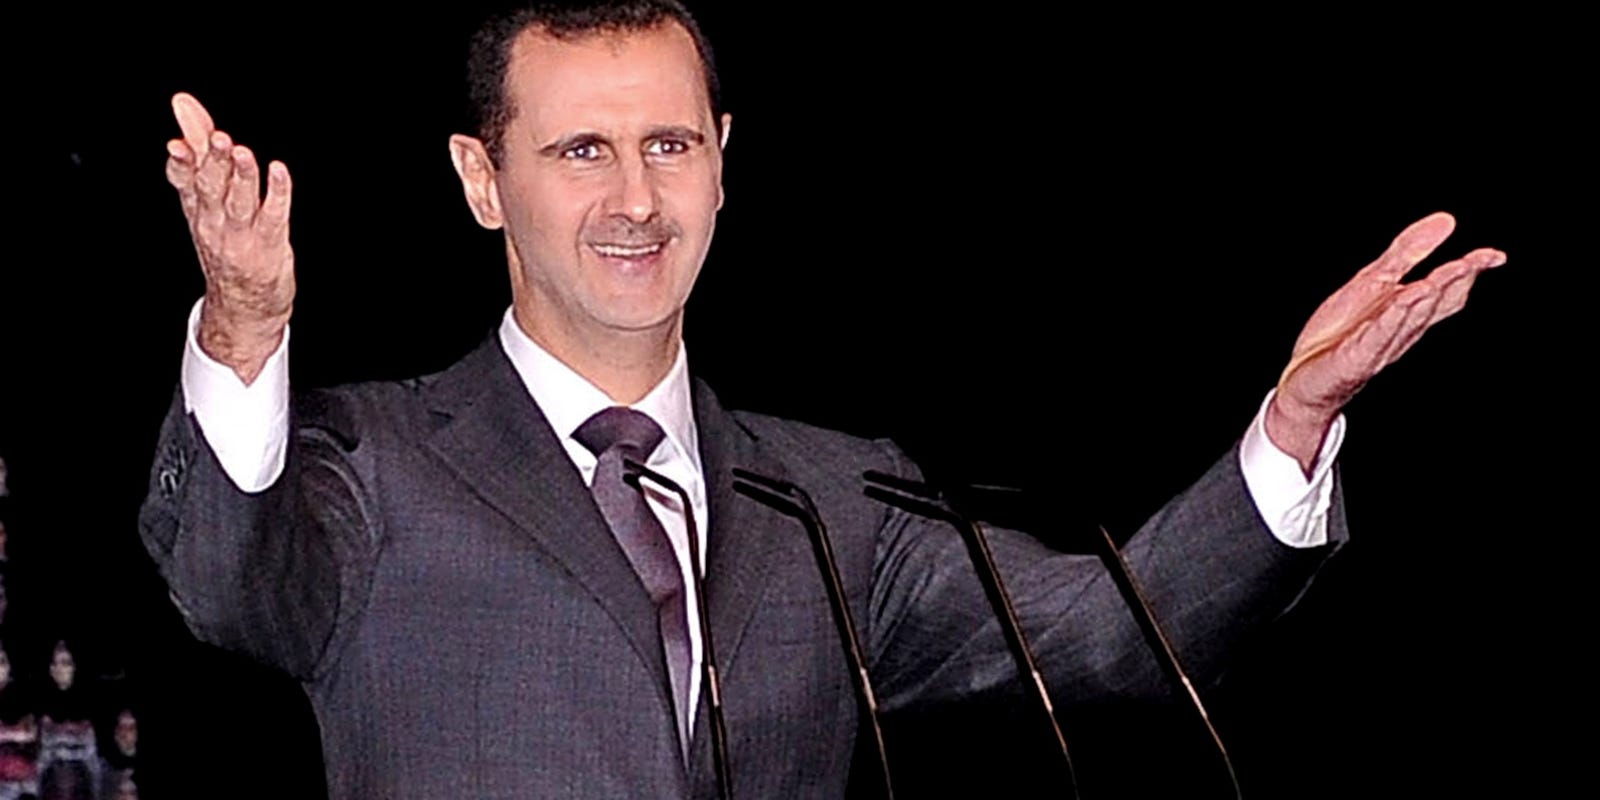 Assad Accuses Britain Us Of Supporting Terrorism